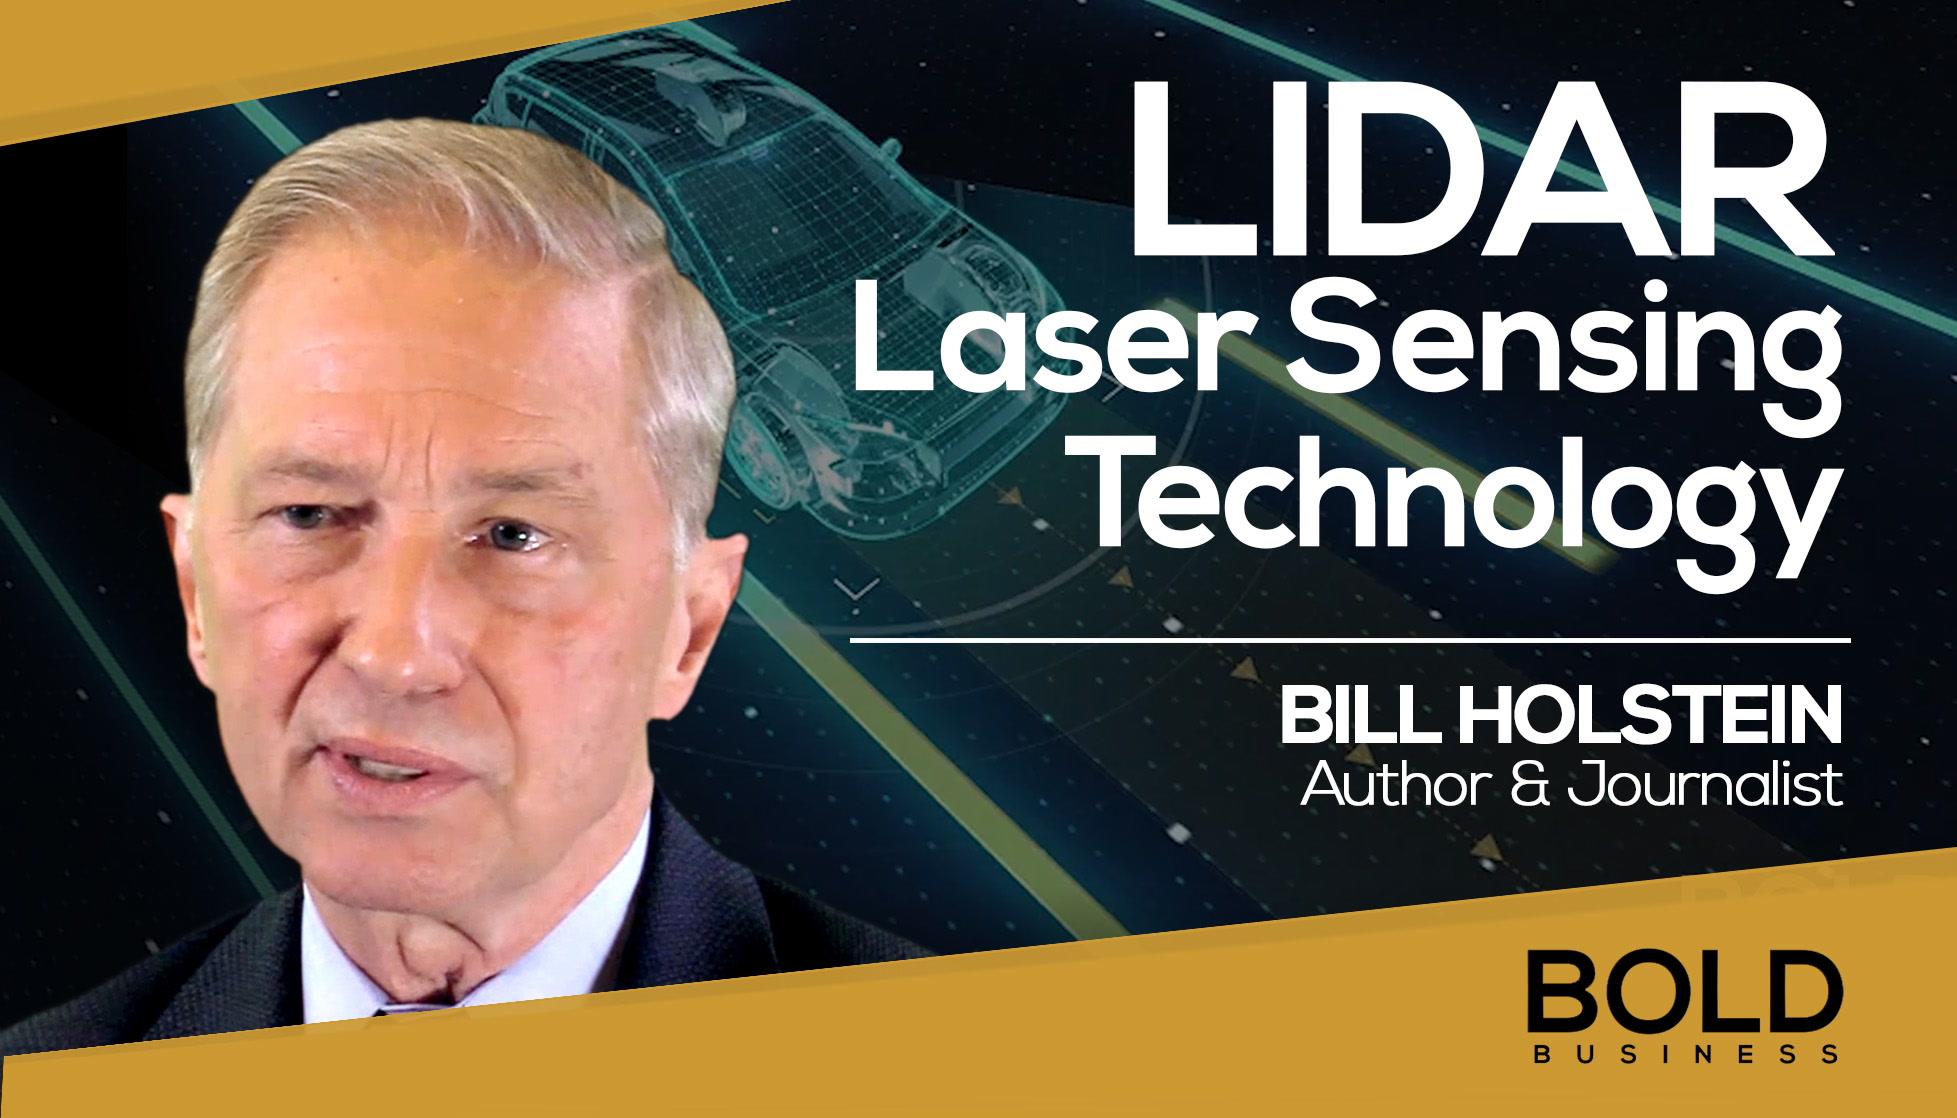 Bill Holstein: LIDAR in Self-Driving Cars